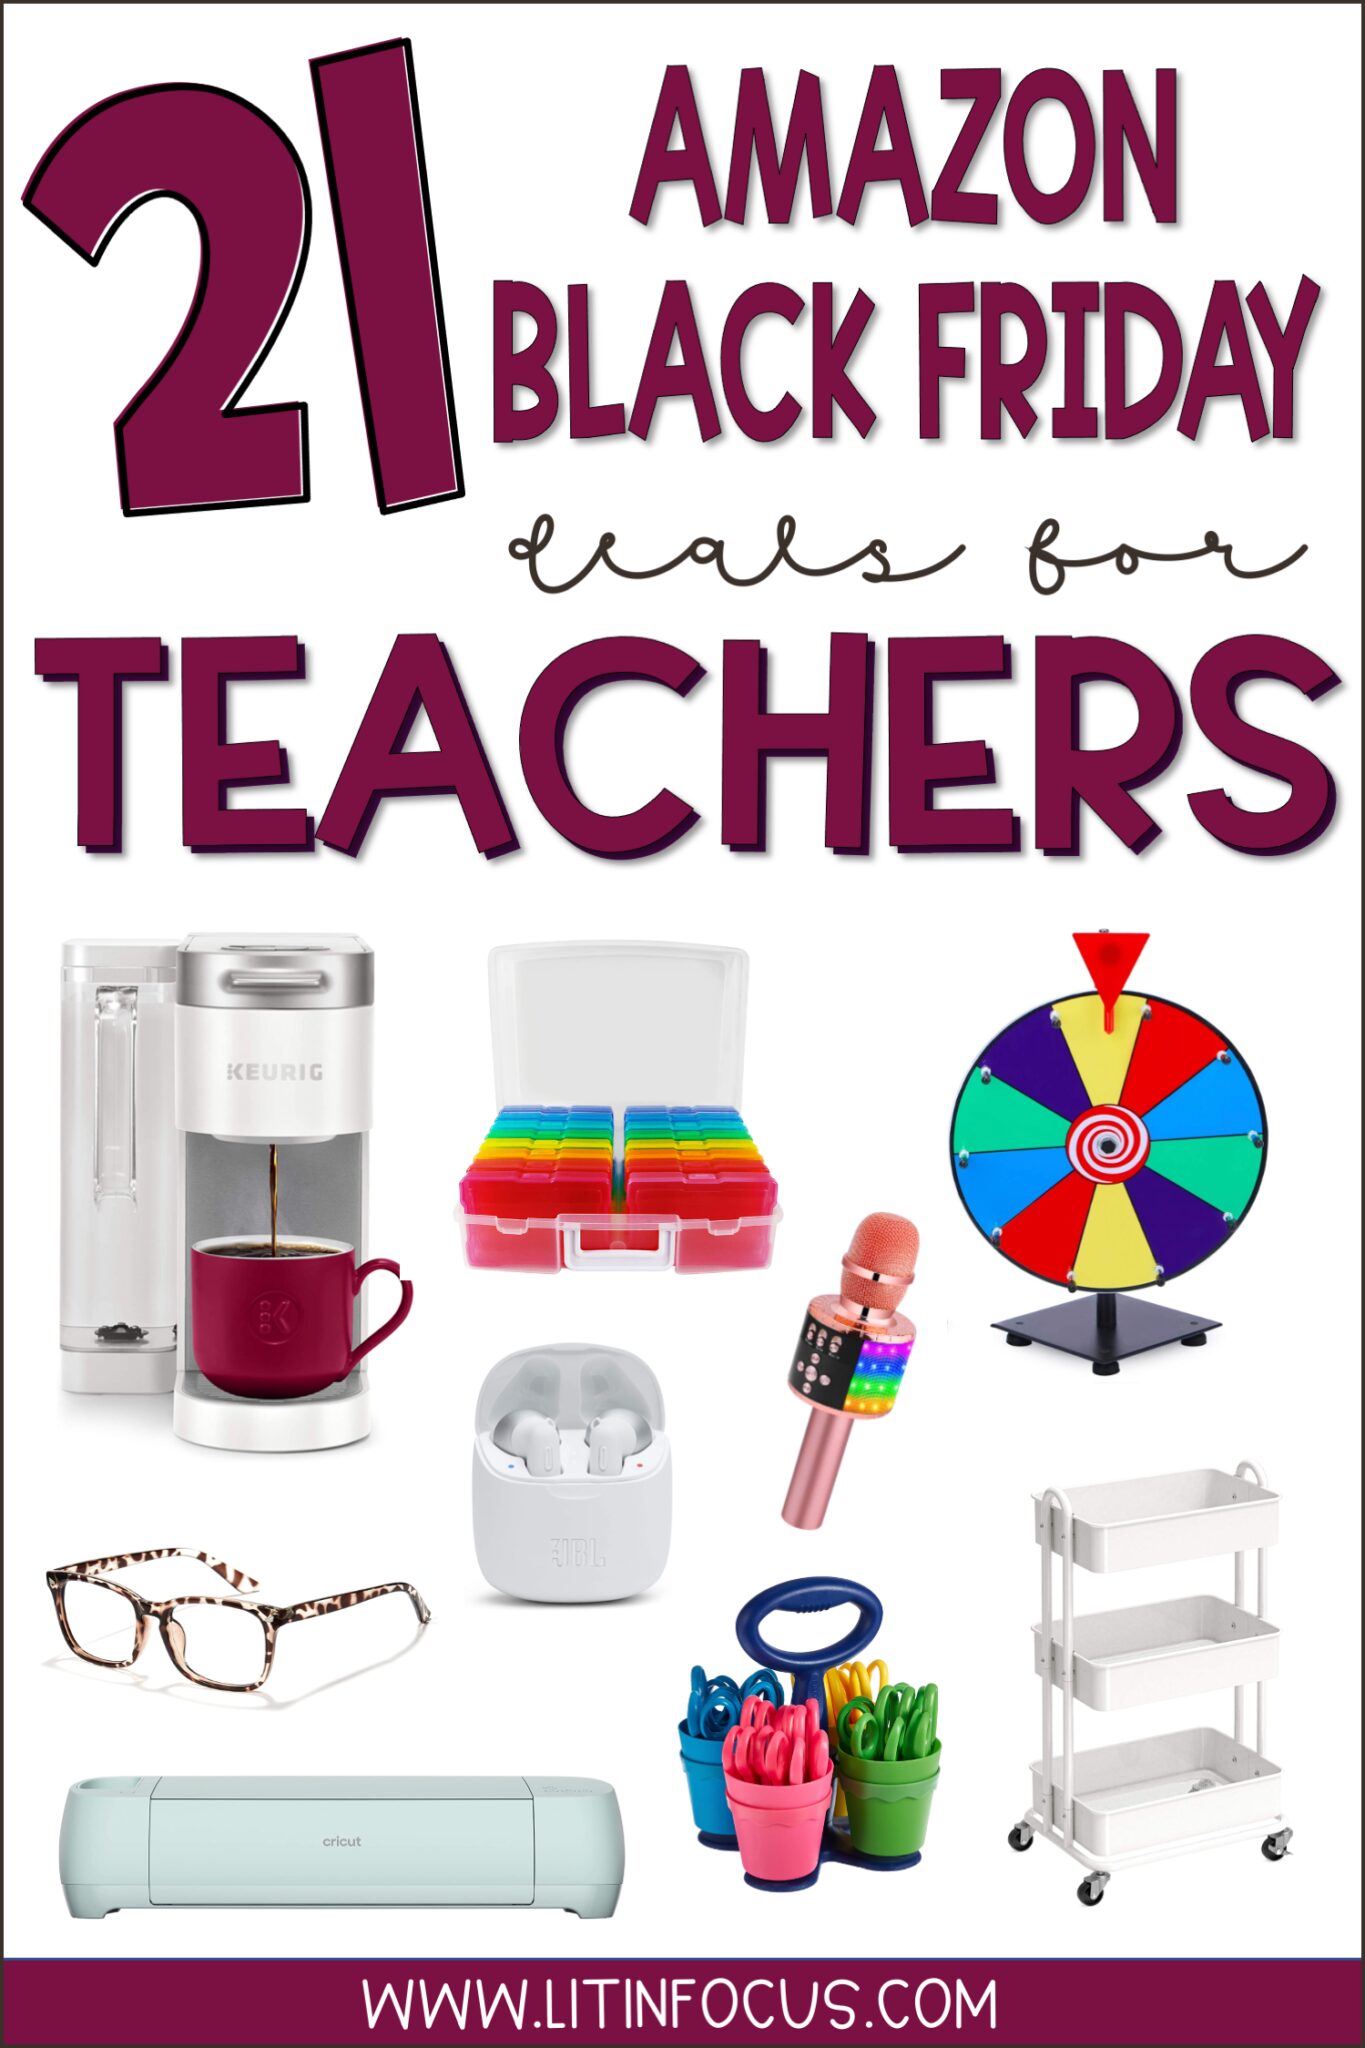 21 Black Friday Deals on Amazon for Teachers